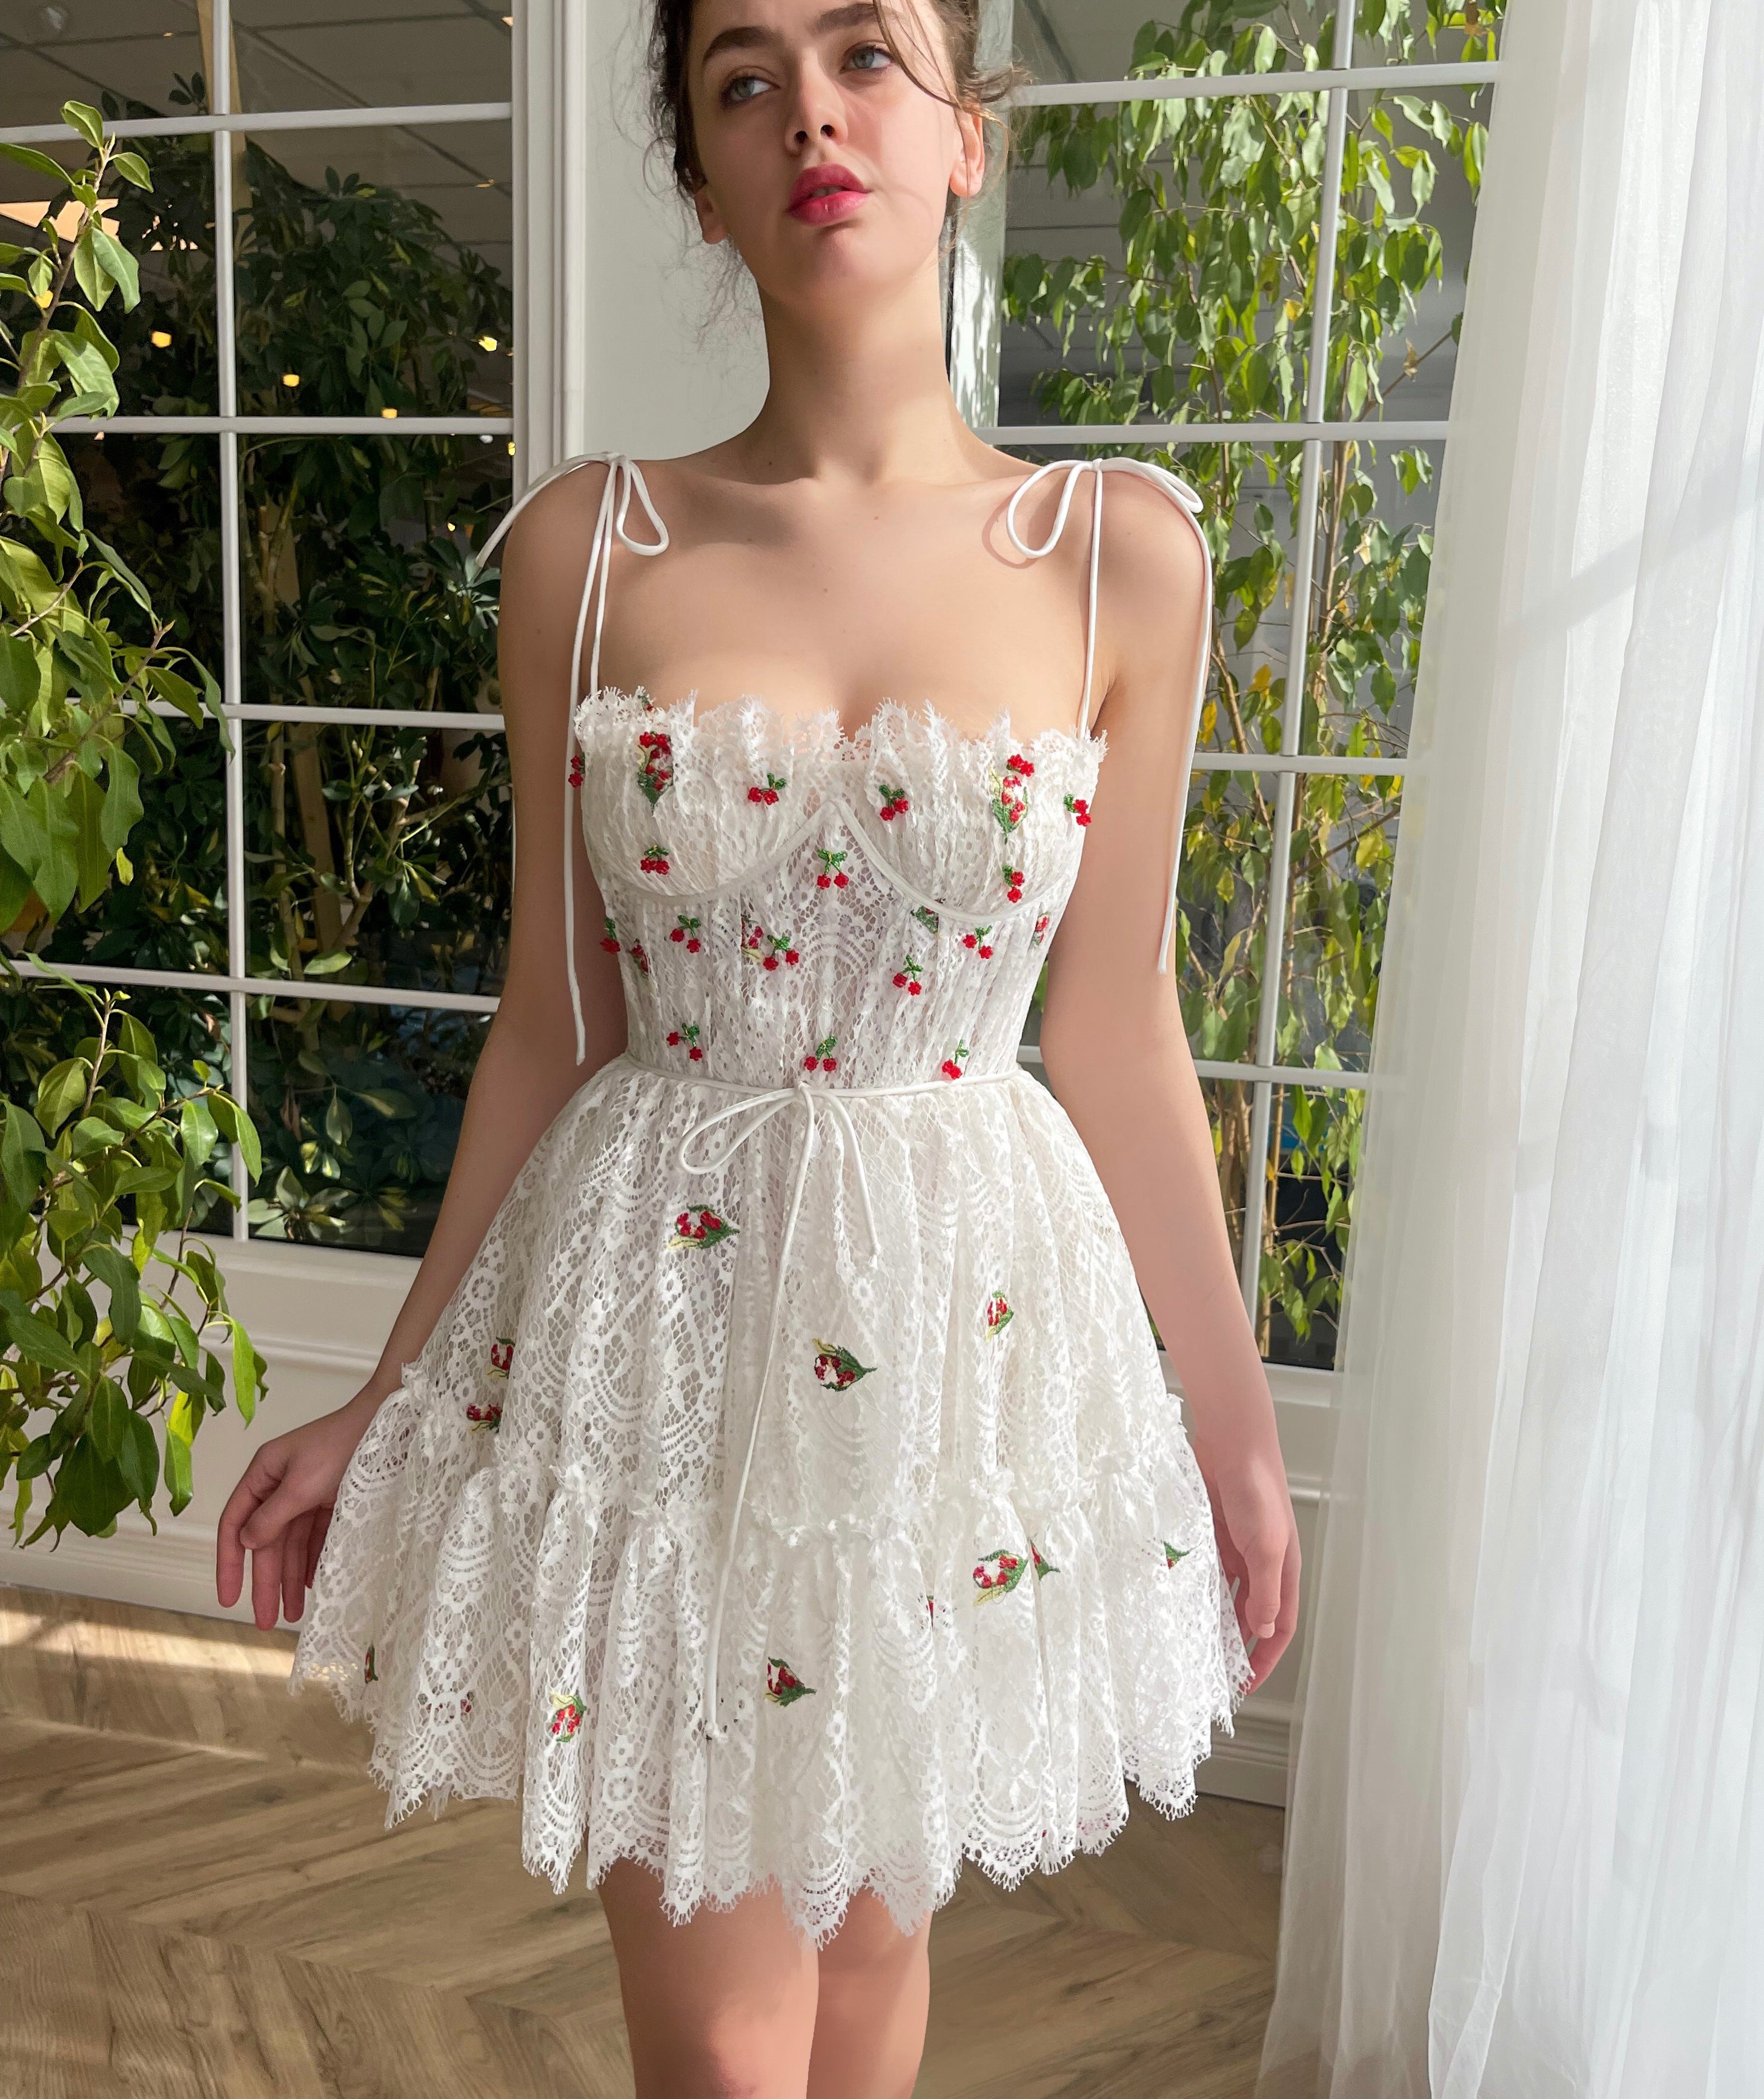 white floral dress